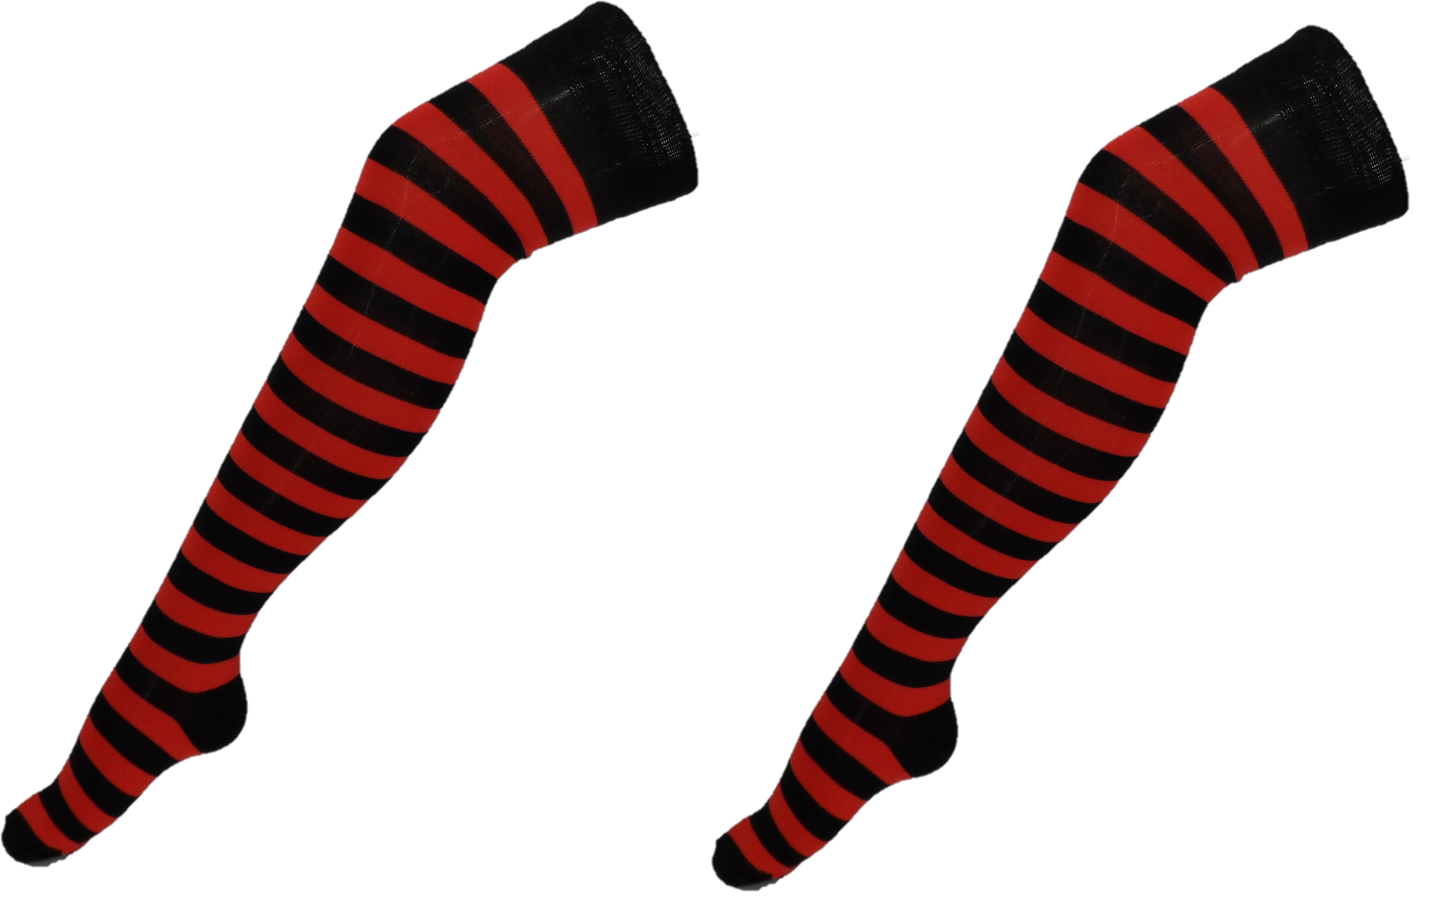 Ladies 2 Pair Pack of Black/Red Striped Over the Knee Socks